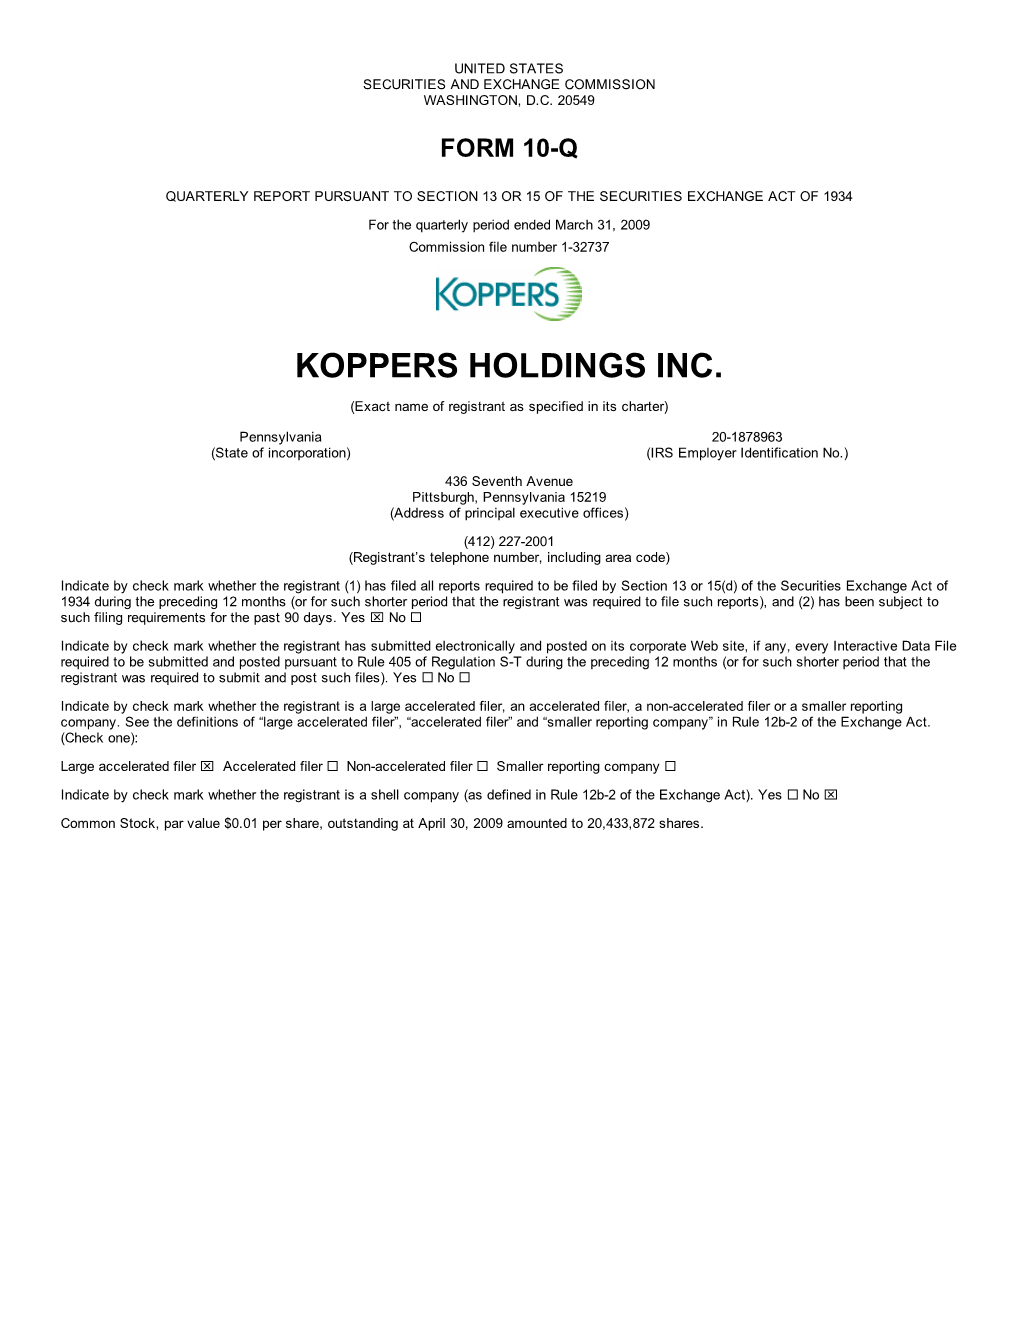 Koppers Holdings Inc